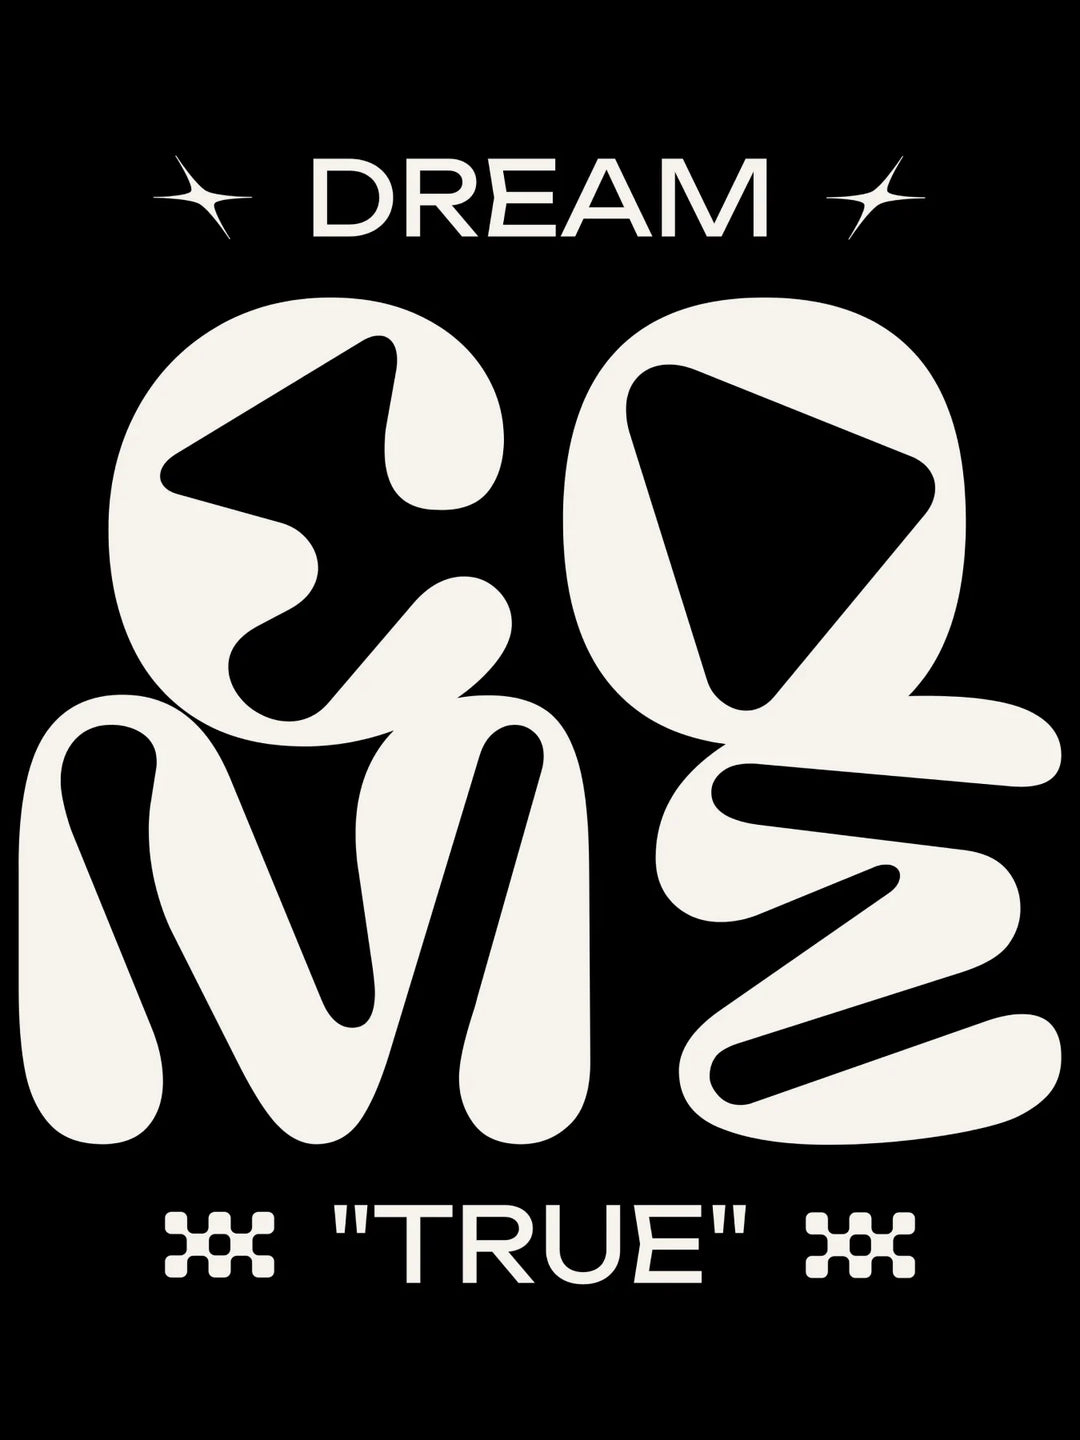 Dream Come True - Unisex T-Shirt